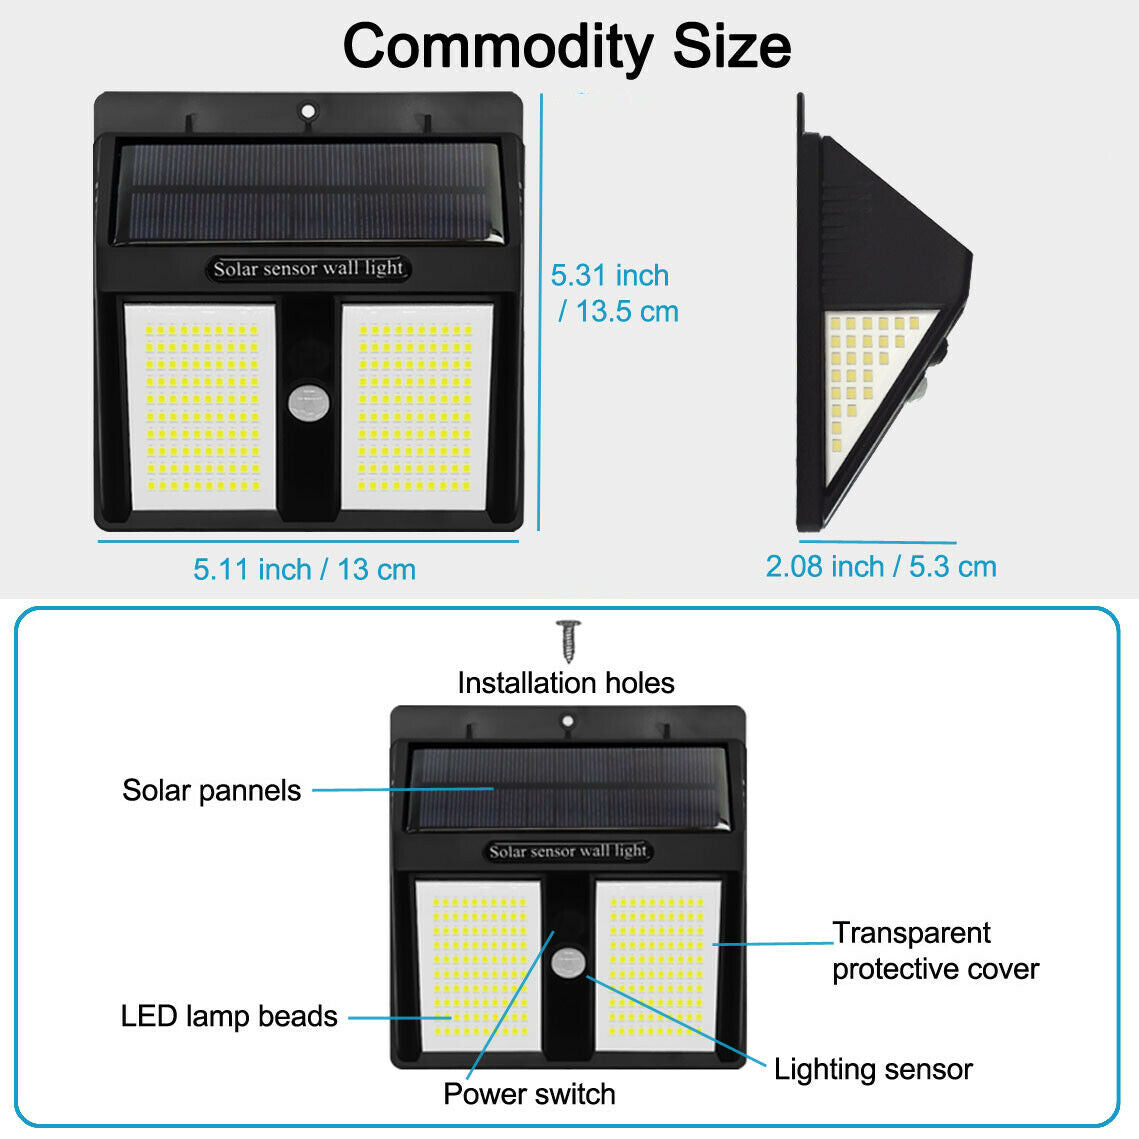 Luces LED solares con sensor de movimiento para exteriores, lámpara de pared de seguridad para jardín, reflector